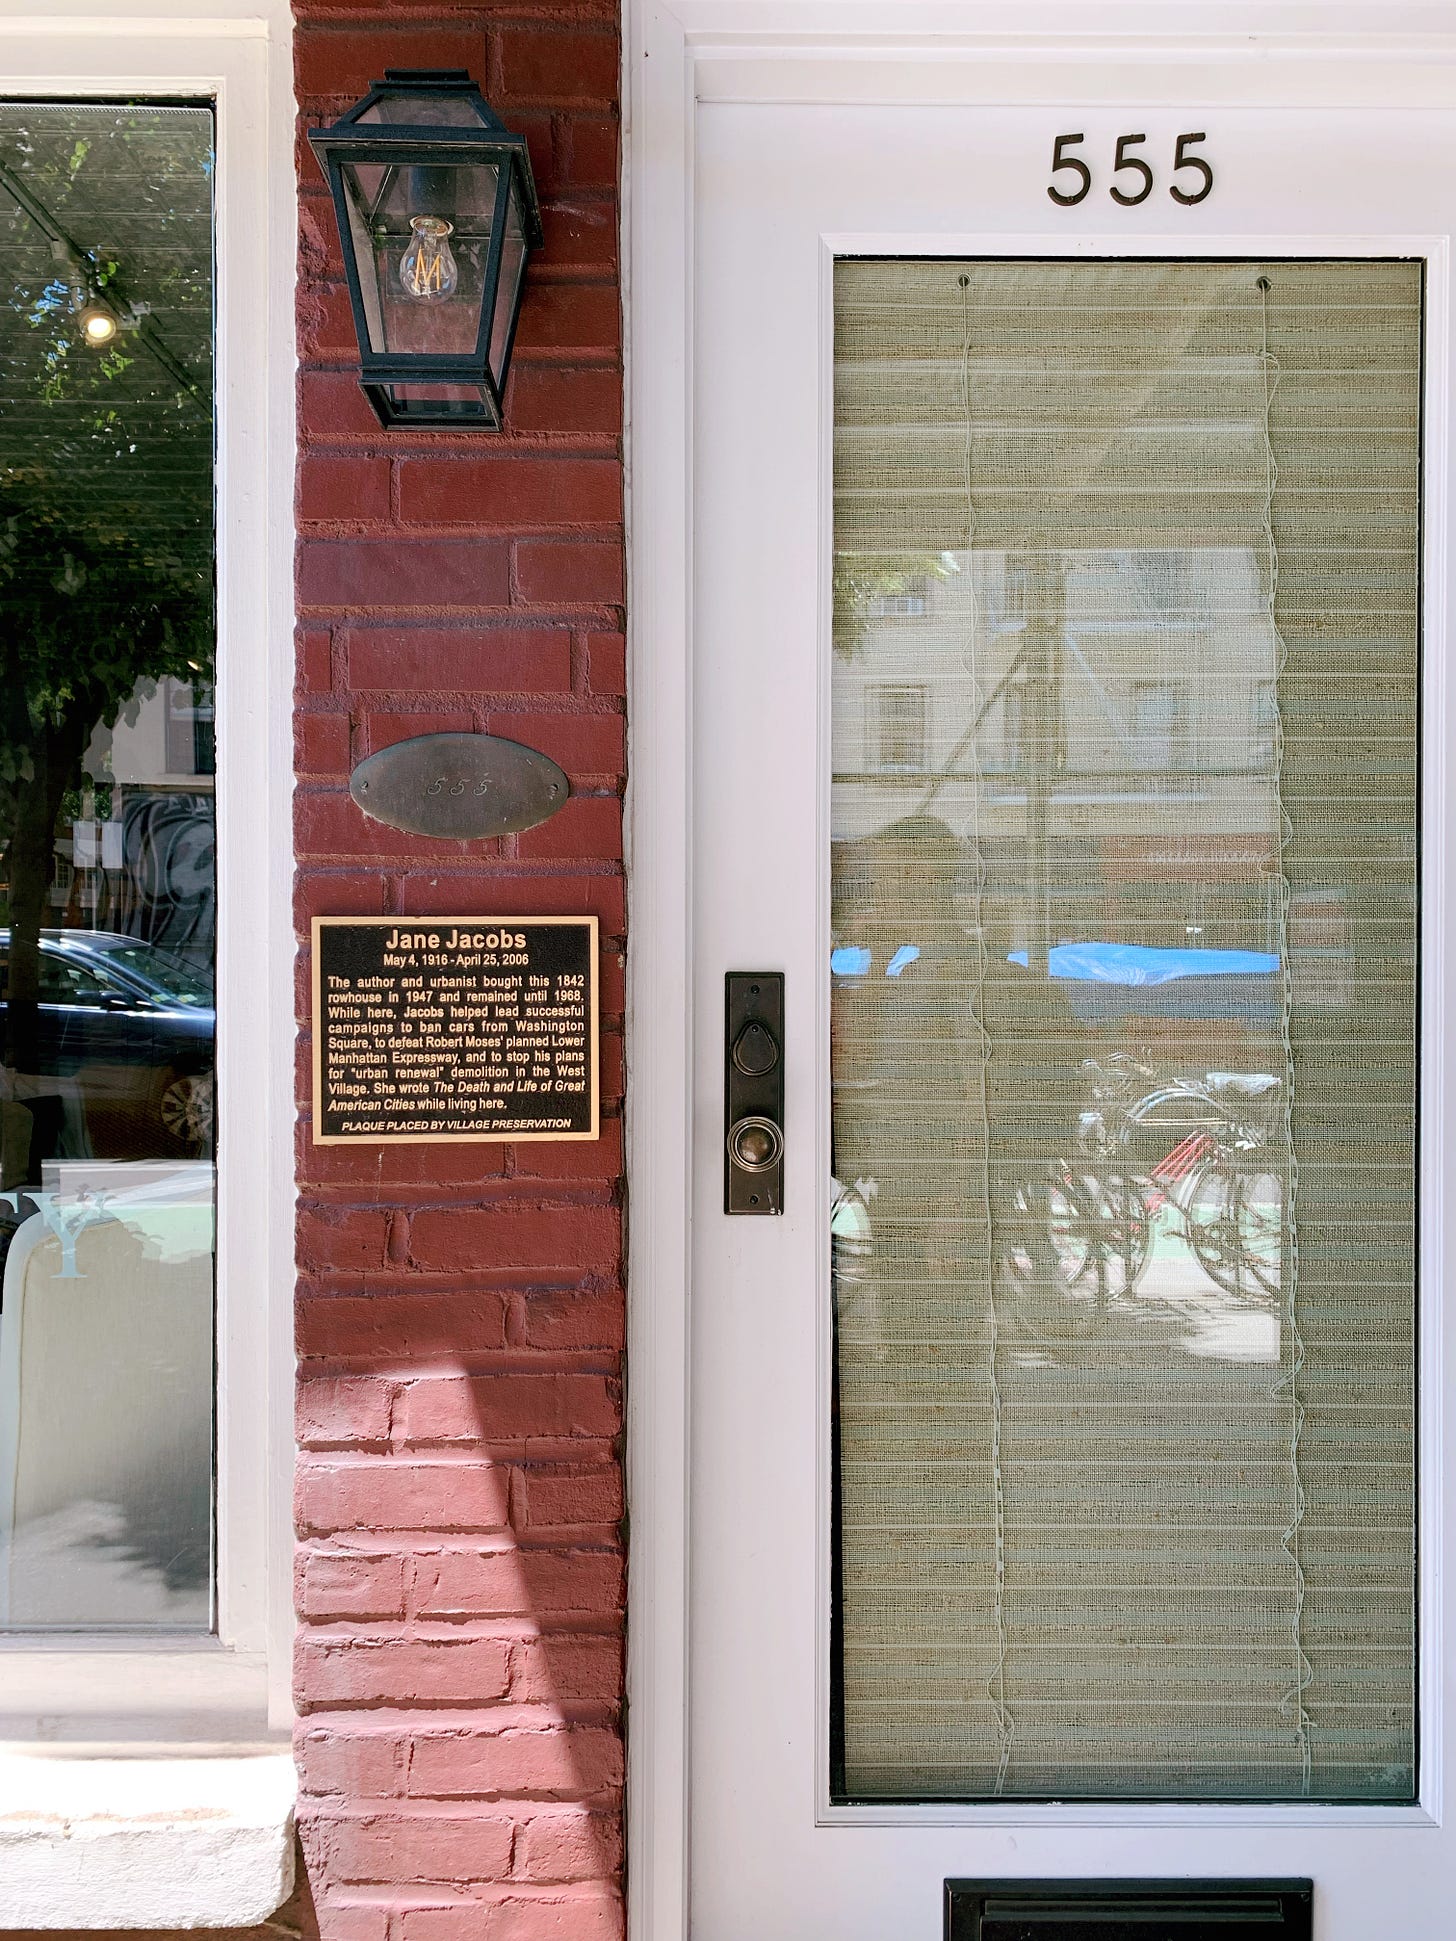 Jane Jacobs plaque at 555 Hudson St